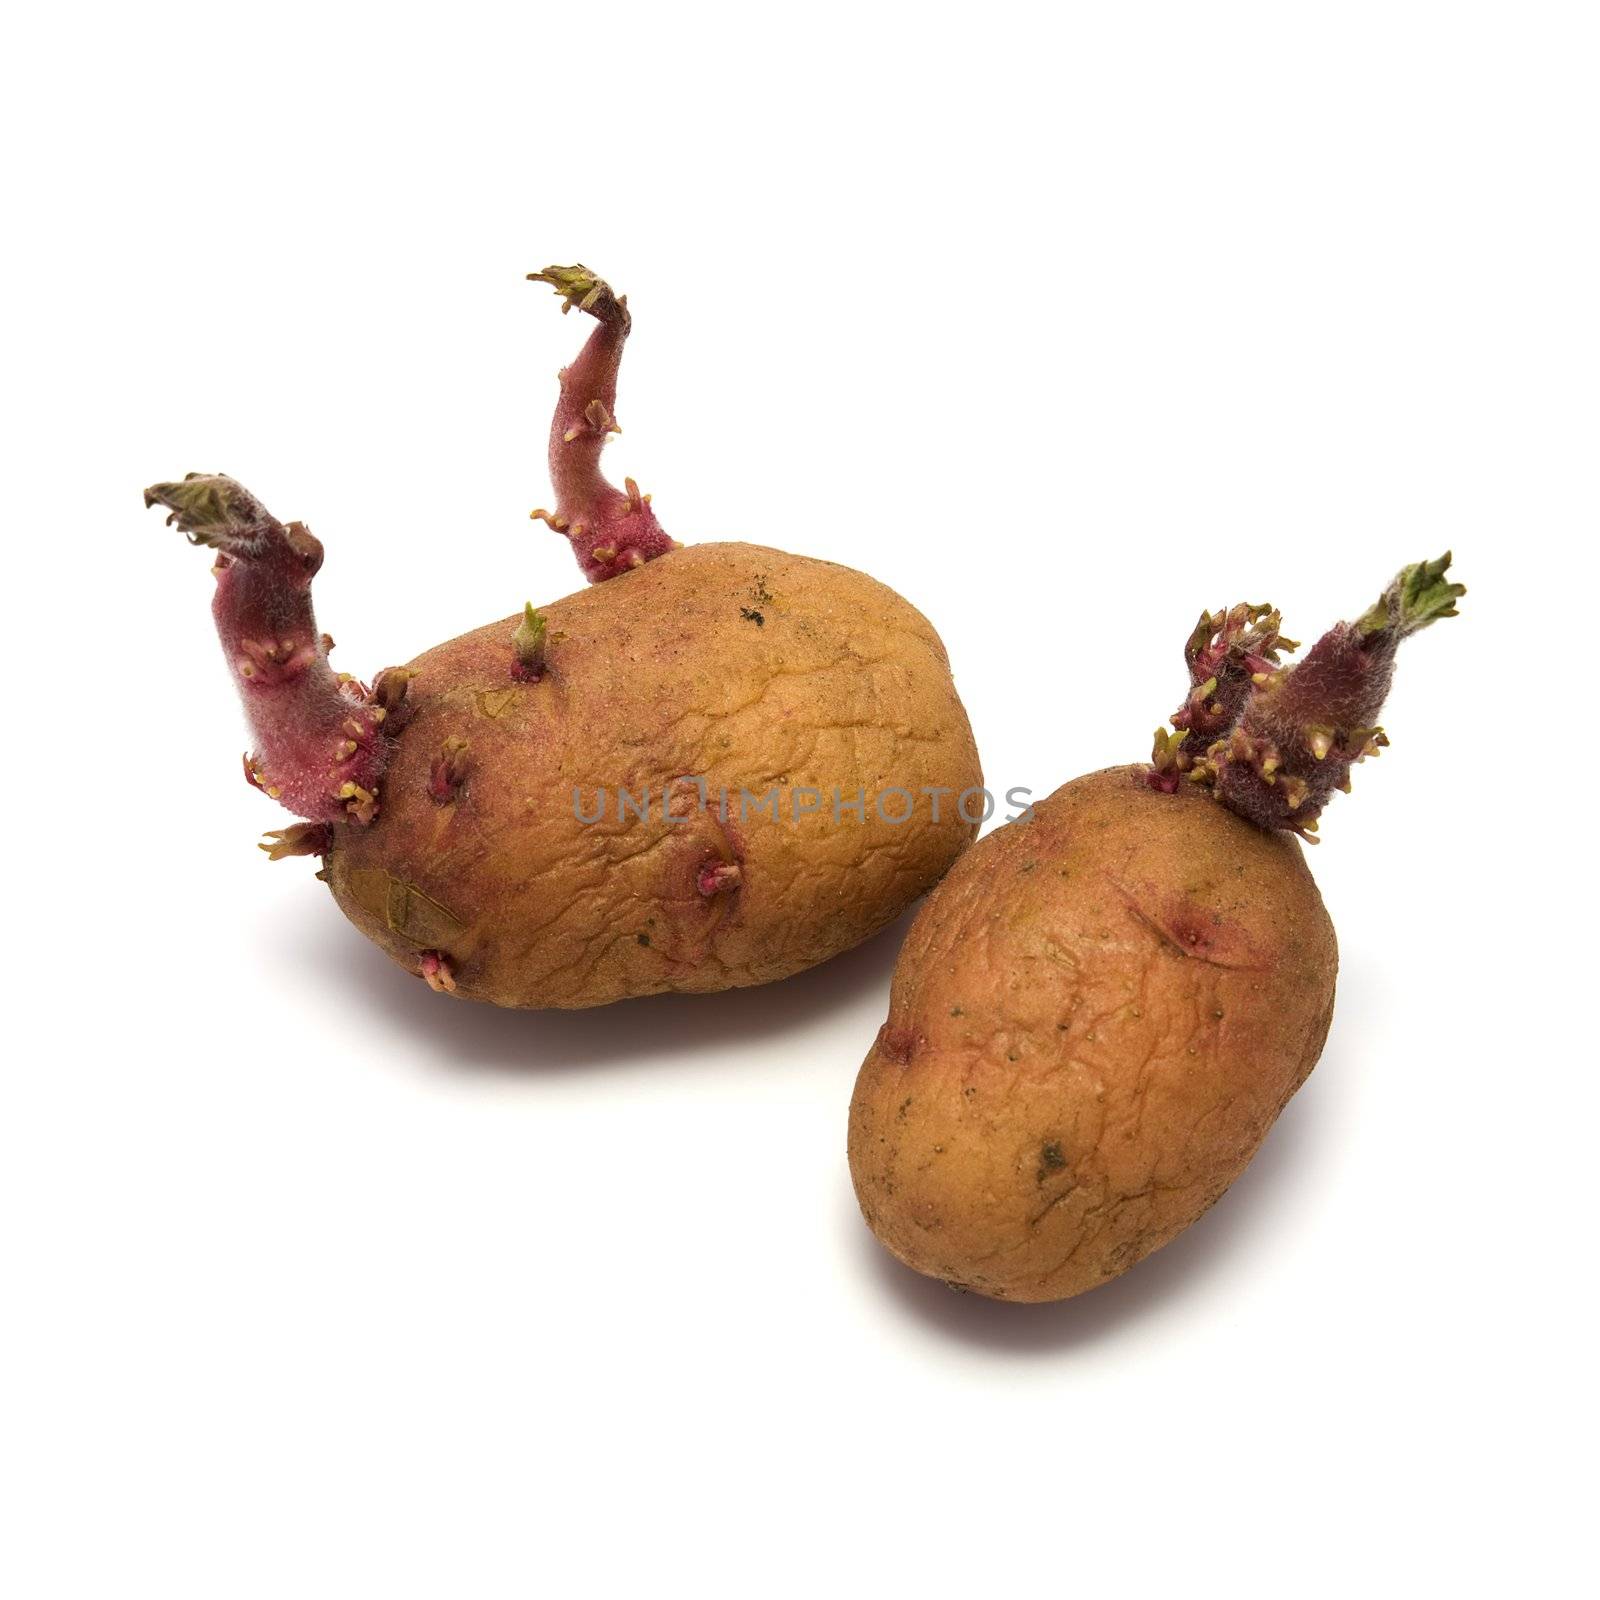 Two progrown tubers of a potato on a white background